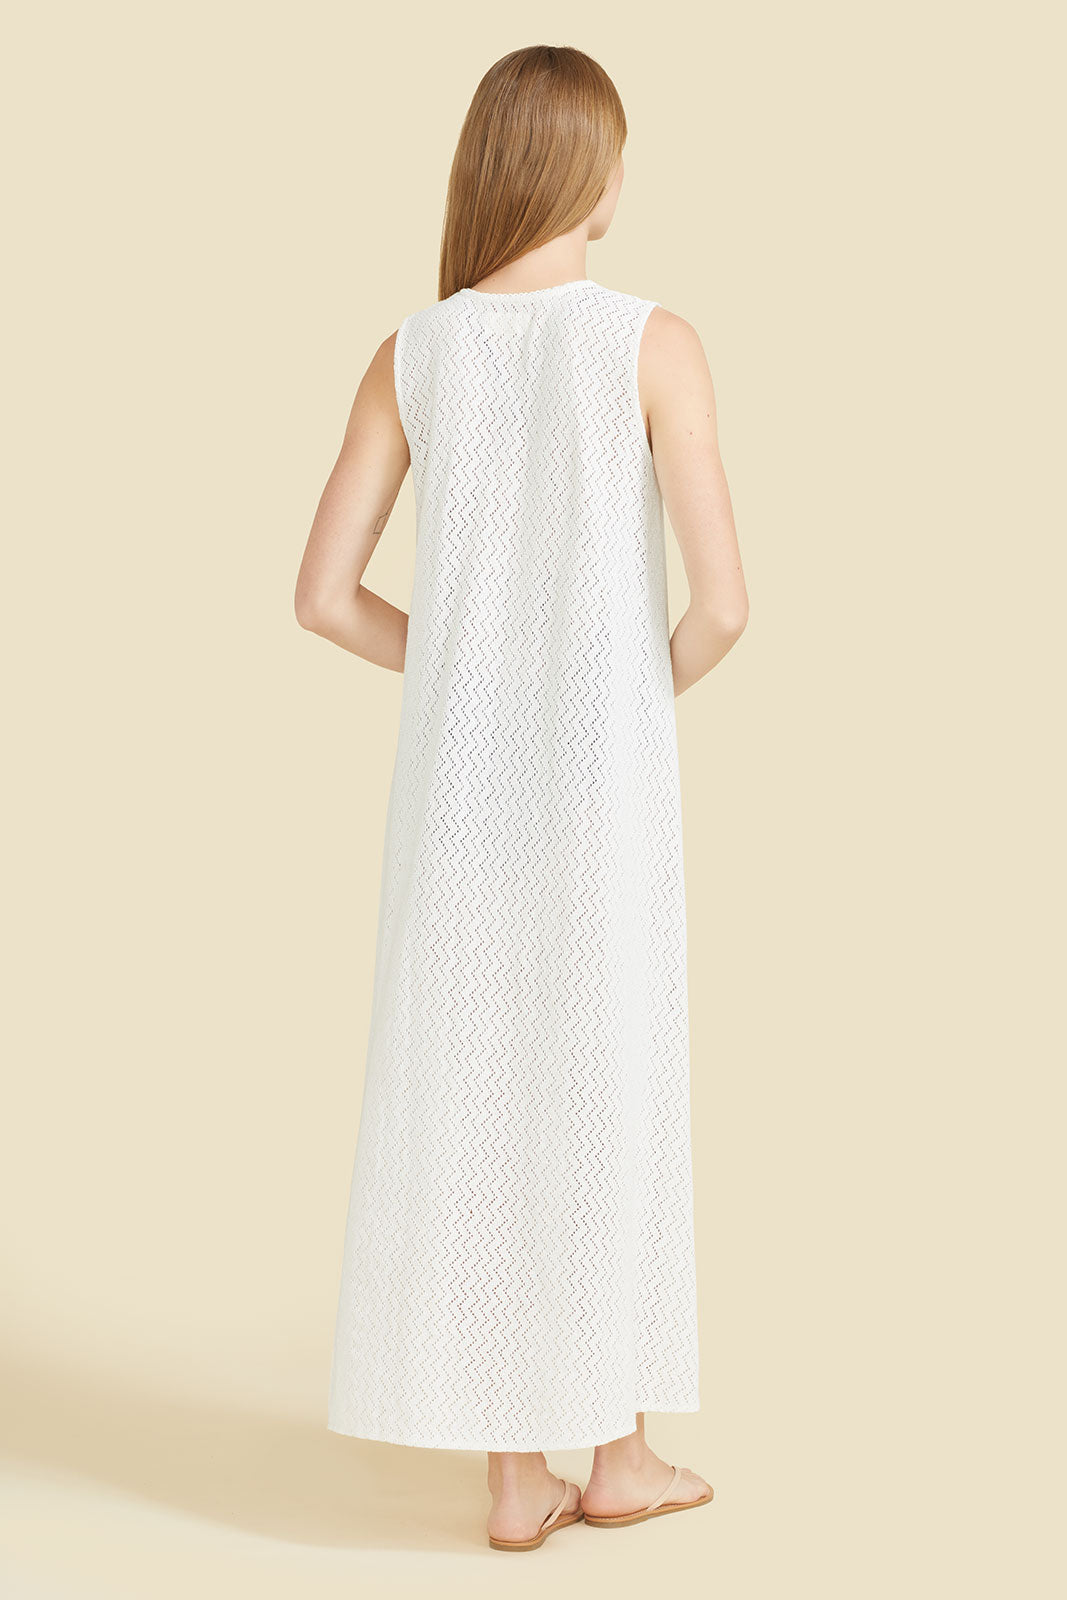 Sorrento Dress - White Crochet by Sitano